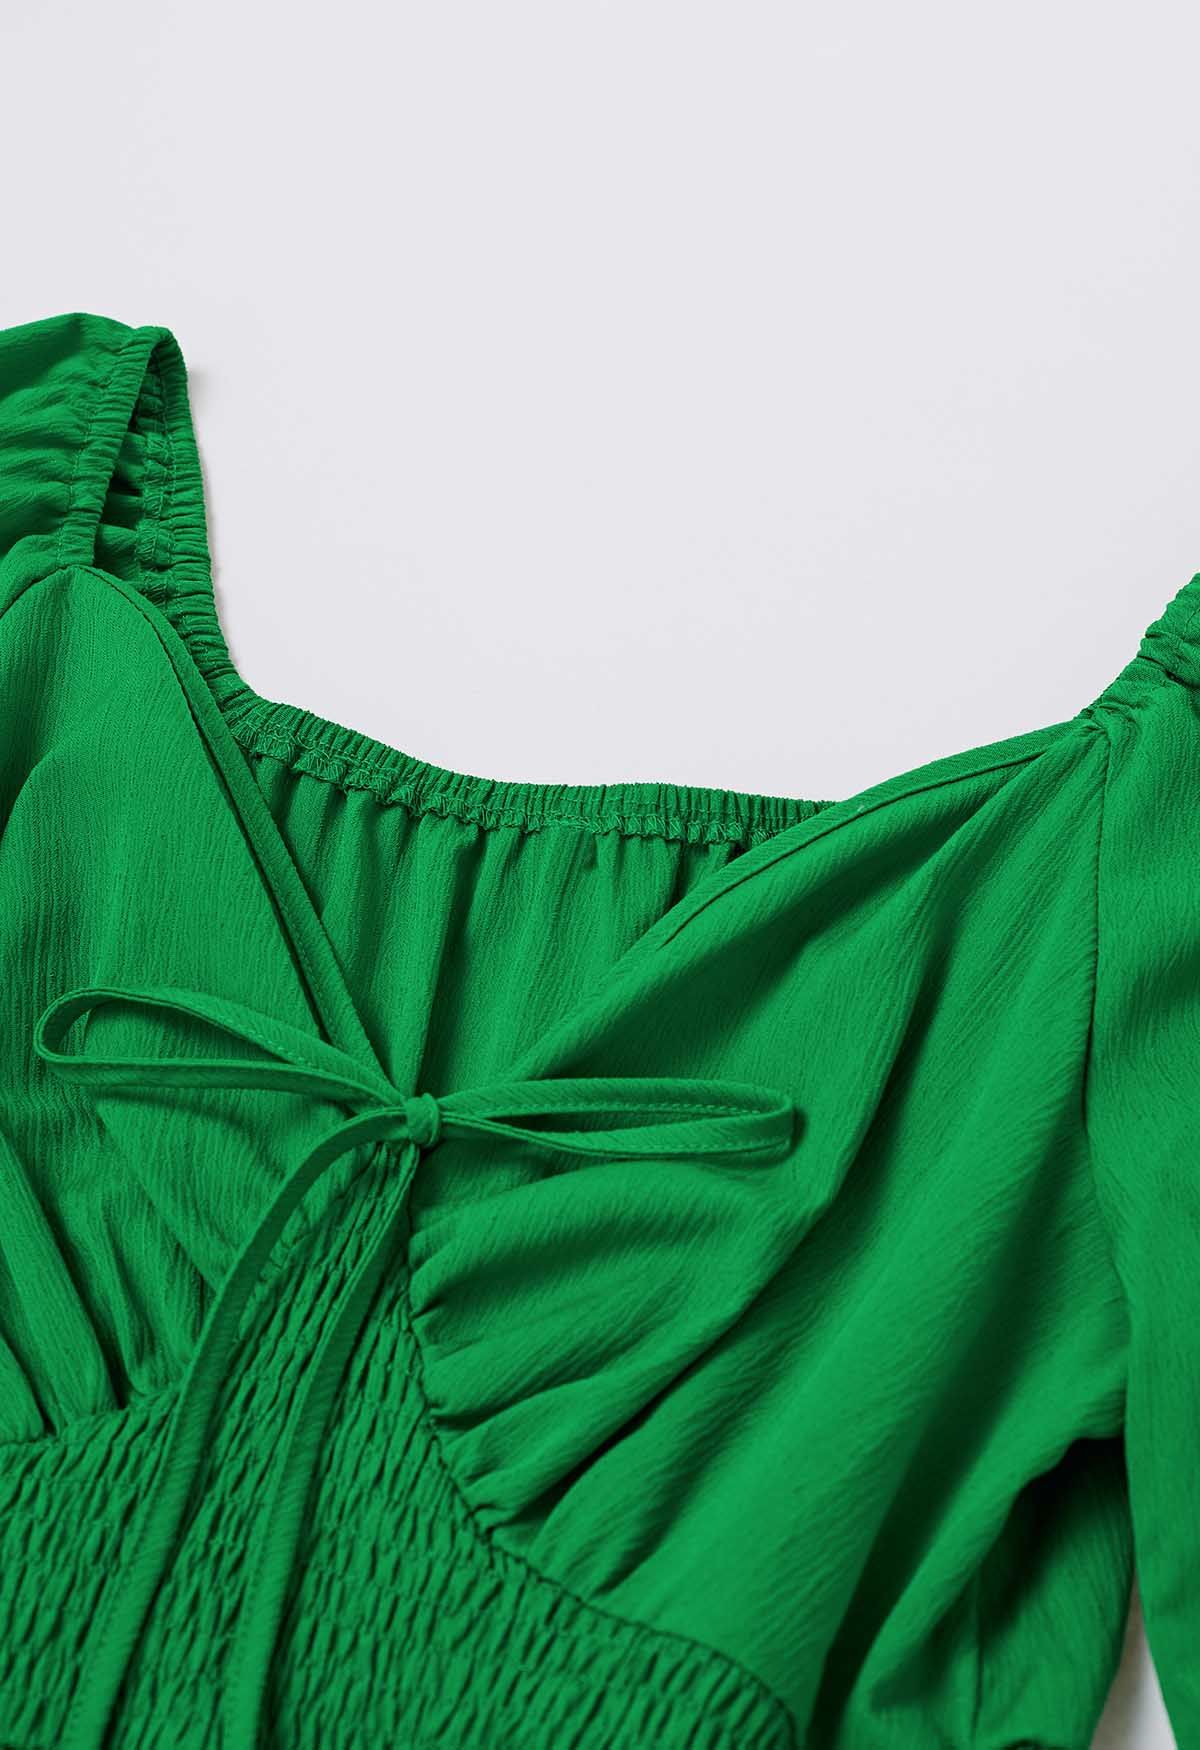 Sweetheart Neck Tie Front Midi Dress in Green